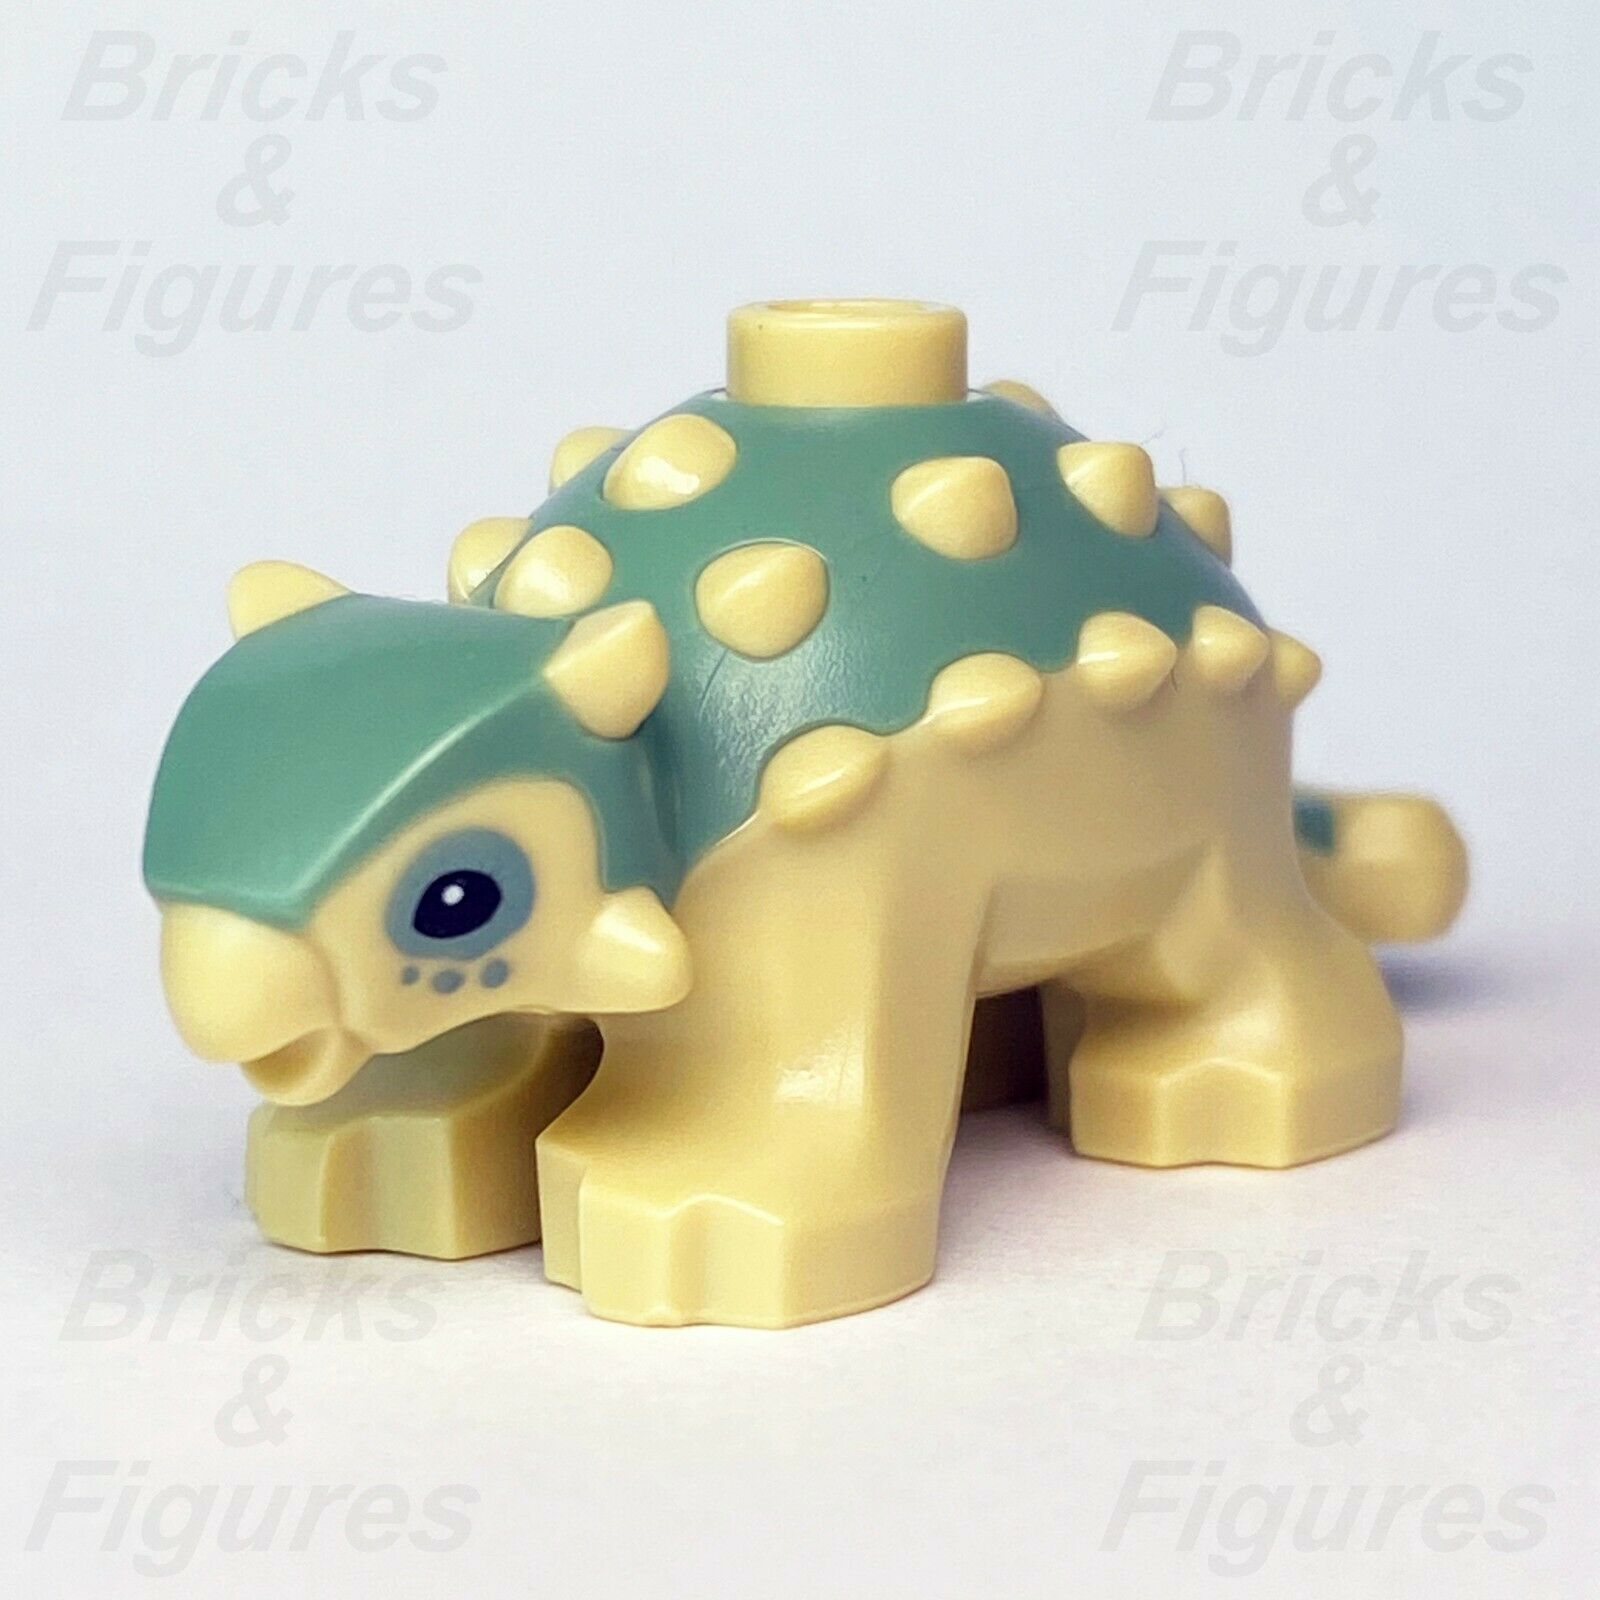 New Jurassic World LEGO Baby Ankylosaurus Dinosaur from set 75939 - Bricks & Figures